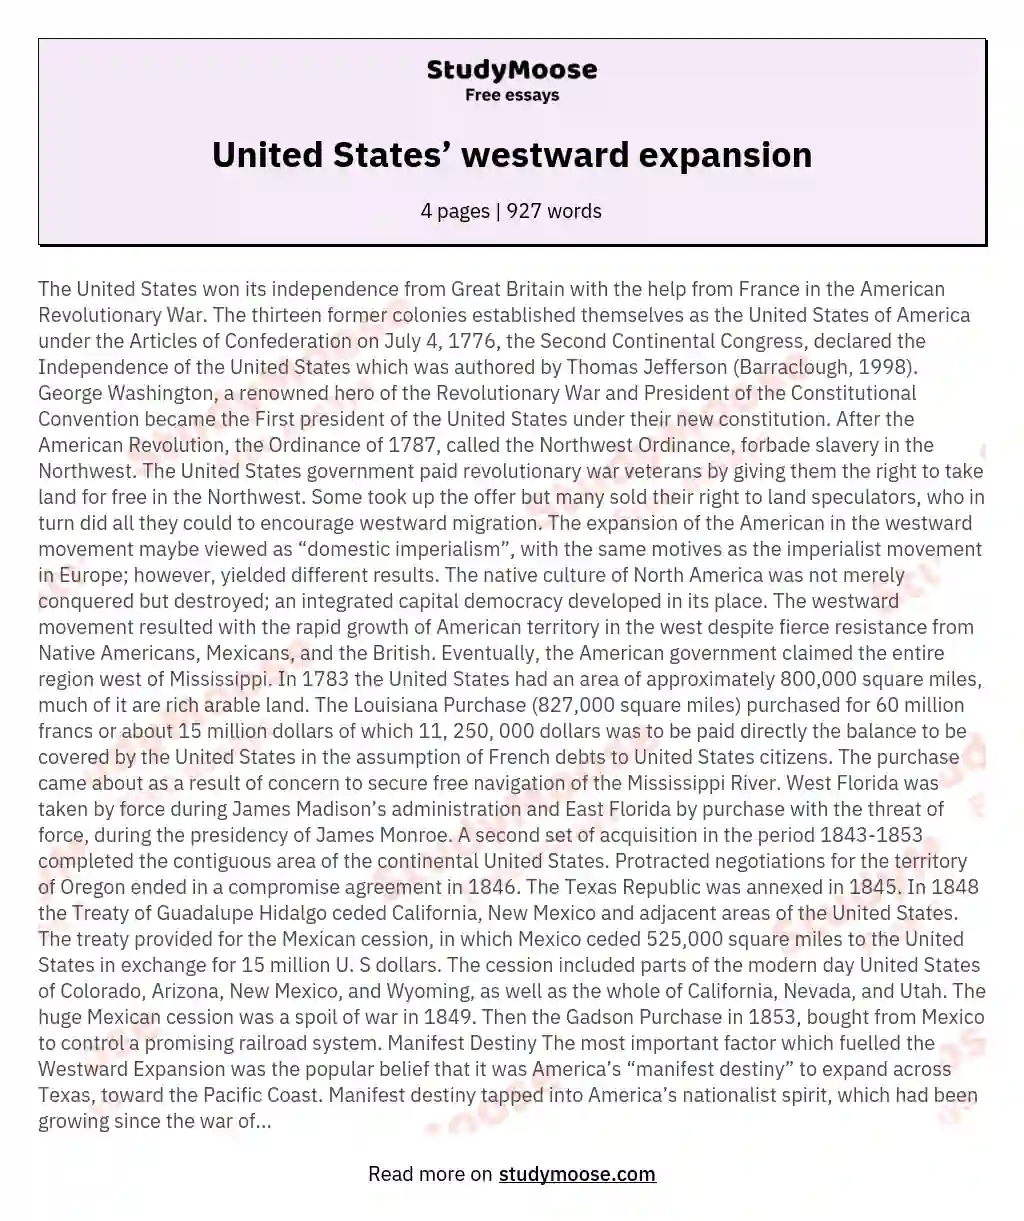 United States’ westward expansion